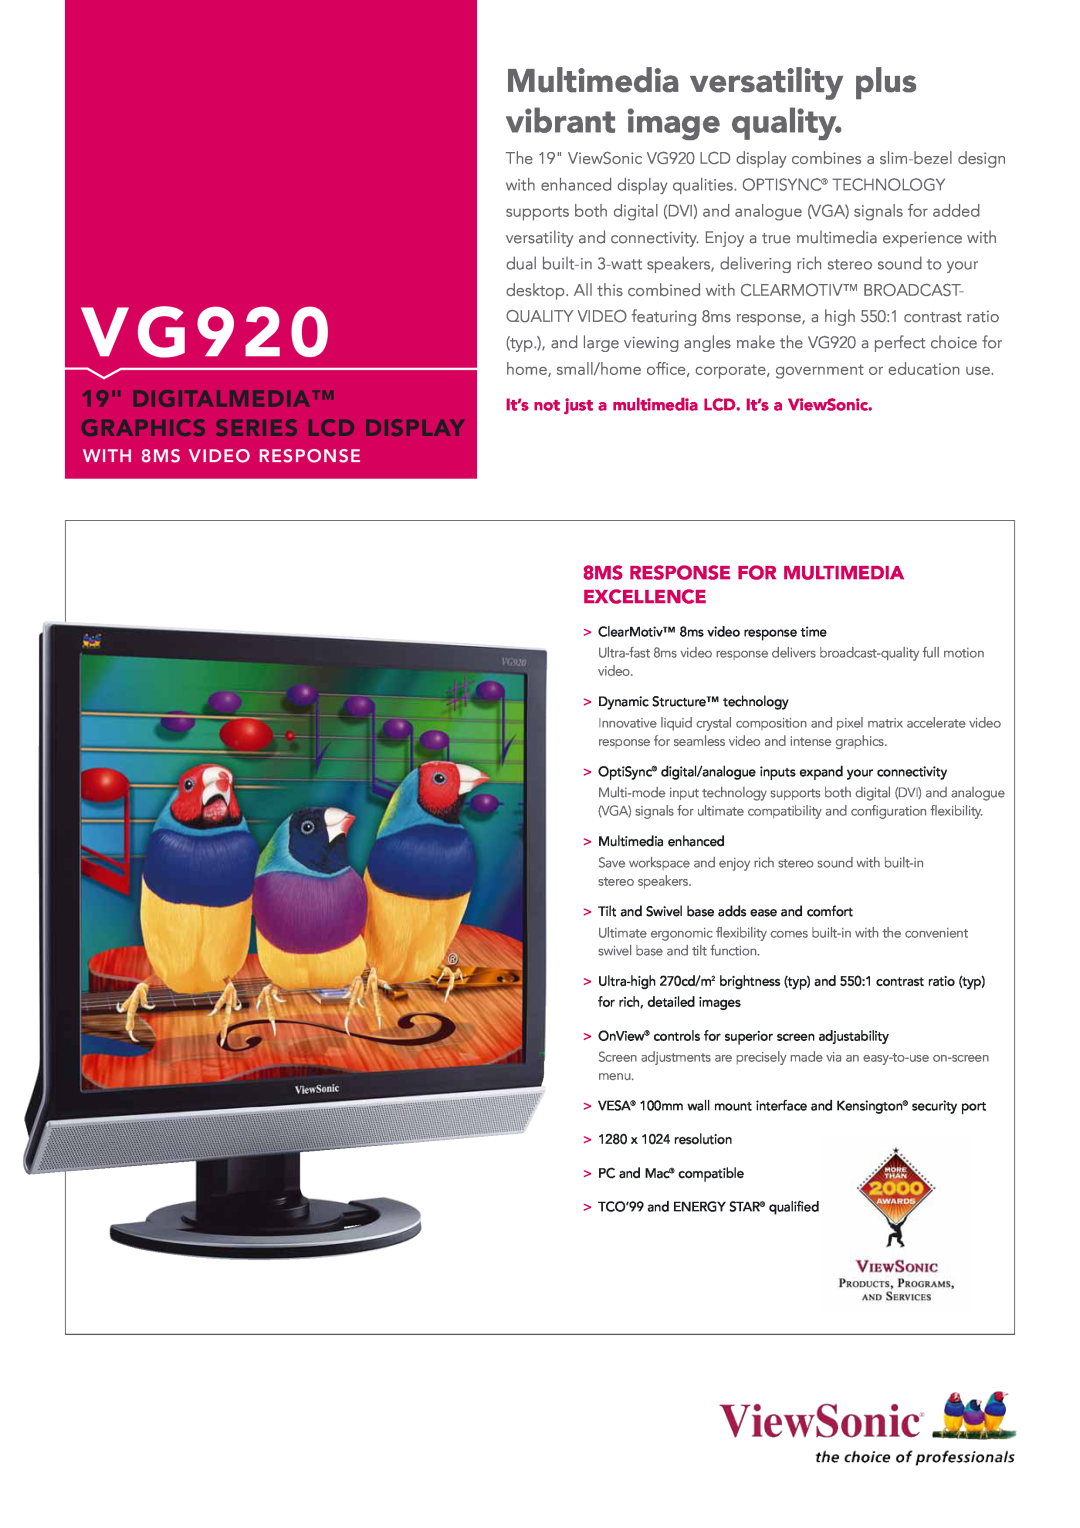 ViewSonic VG920 manual Digitalmedia Graphics Series Lcd Display, V G, Multimedia versatility plus vibrant image quality 